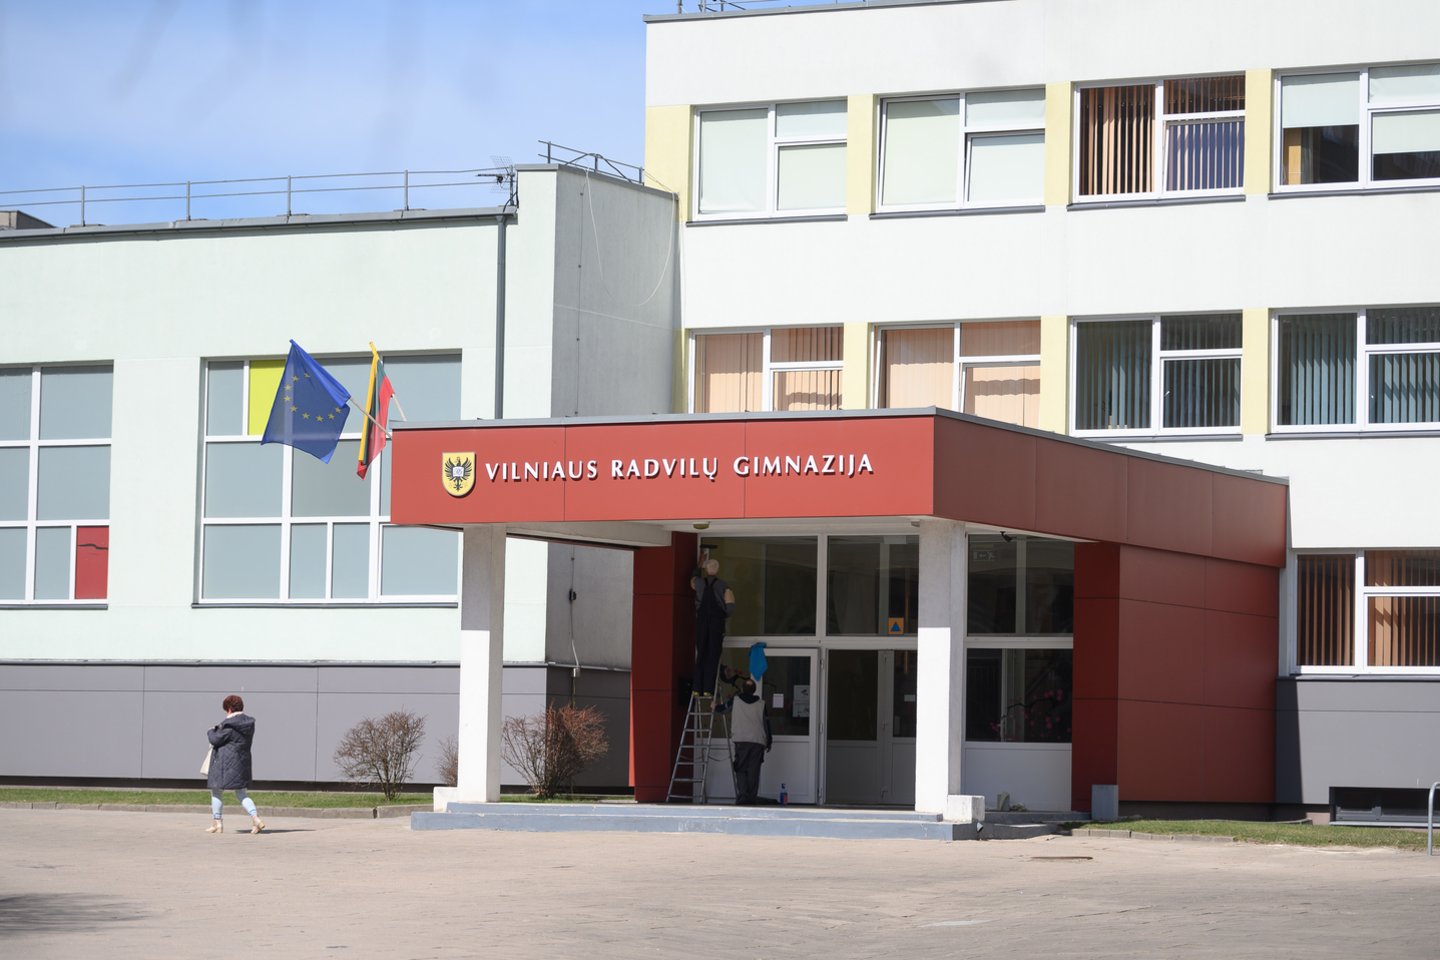  Incidentas įvyko Vilniaus Radvilų gimnazijoje.<br> V.Skaraičio nuotr.